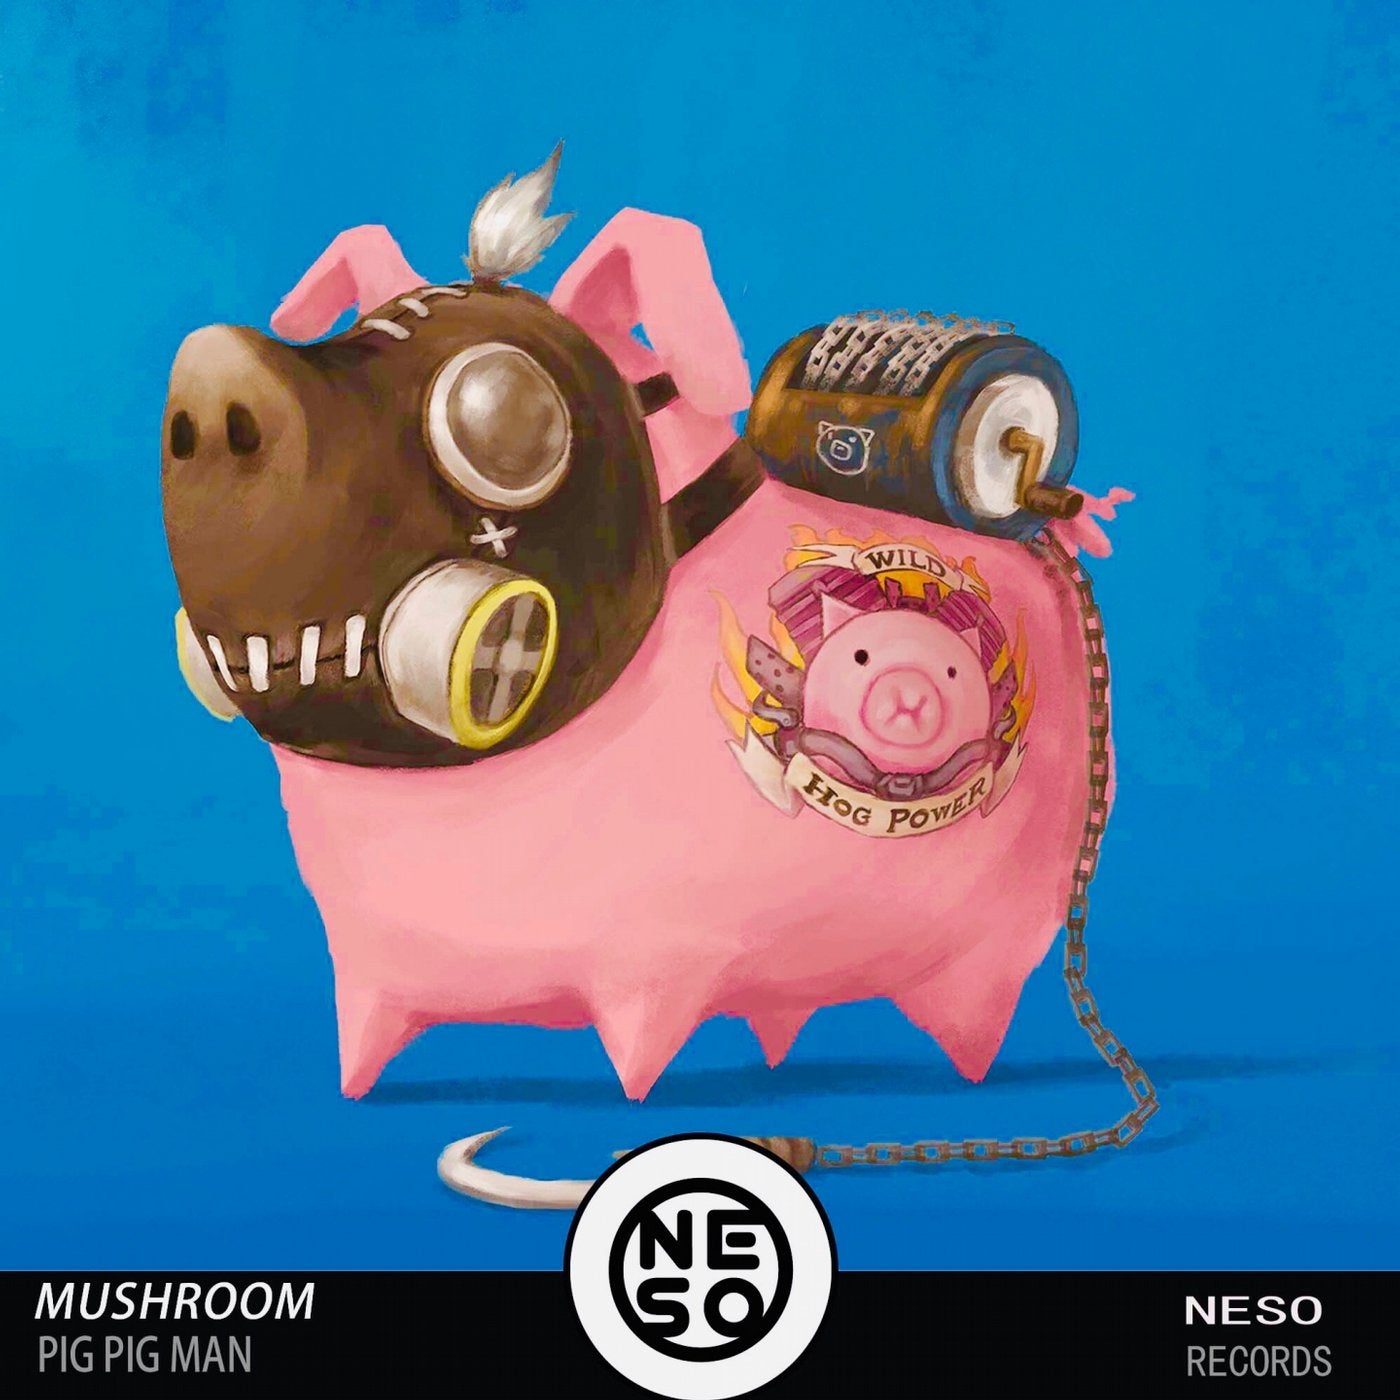 Mushroom - Pig Pig Man